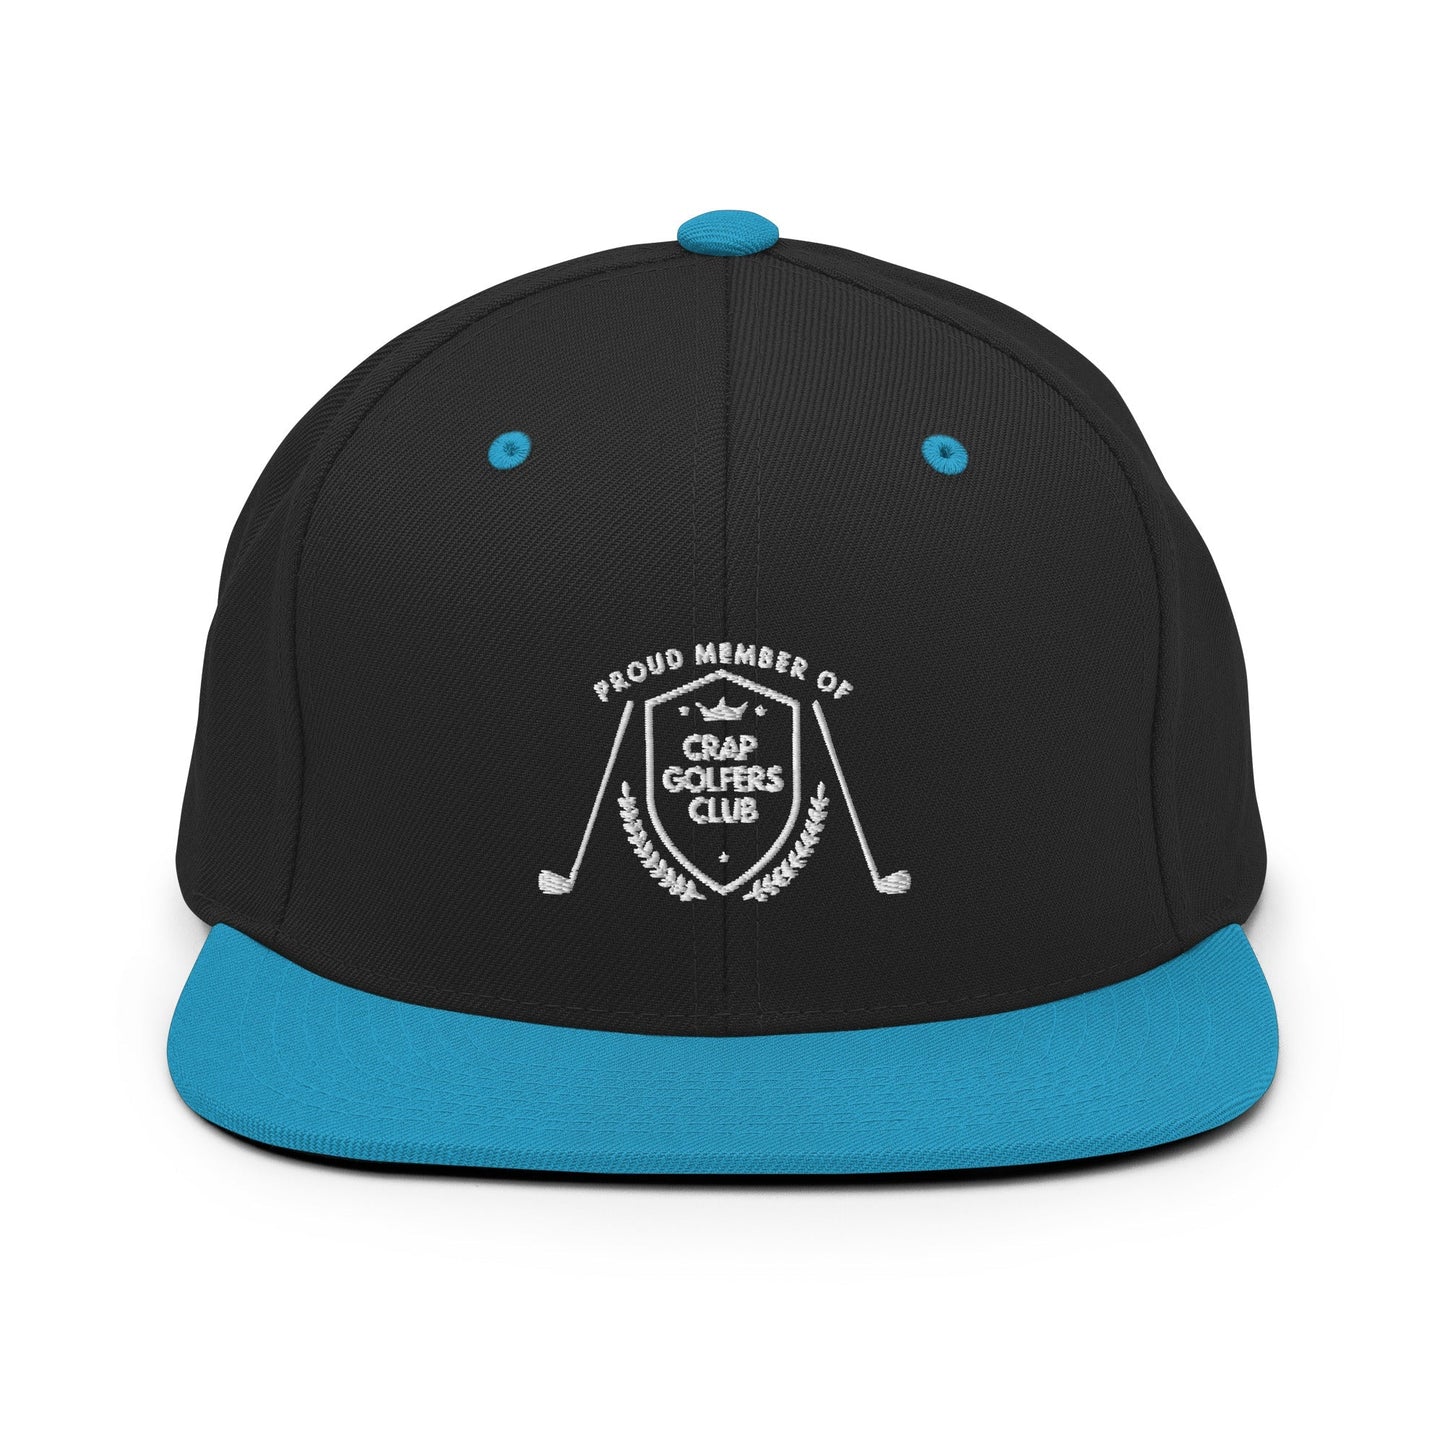 Funny Golfer Gifts  Snapback Hat Black/ Teal Crap Golfers Club Snapback Hat